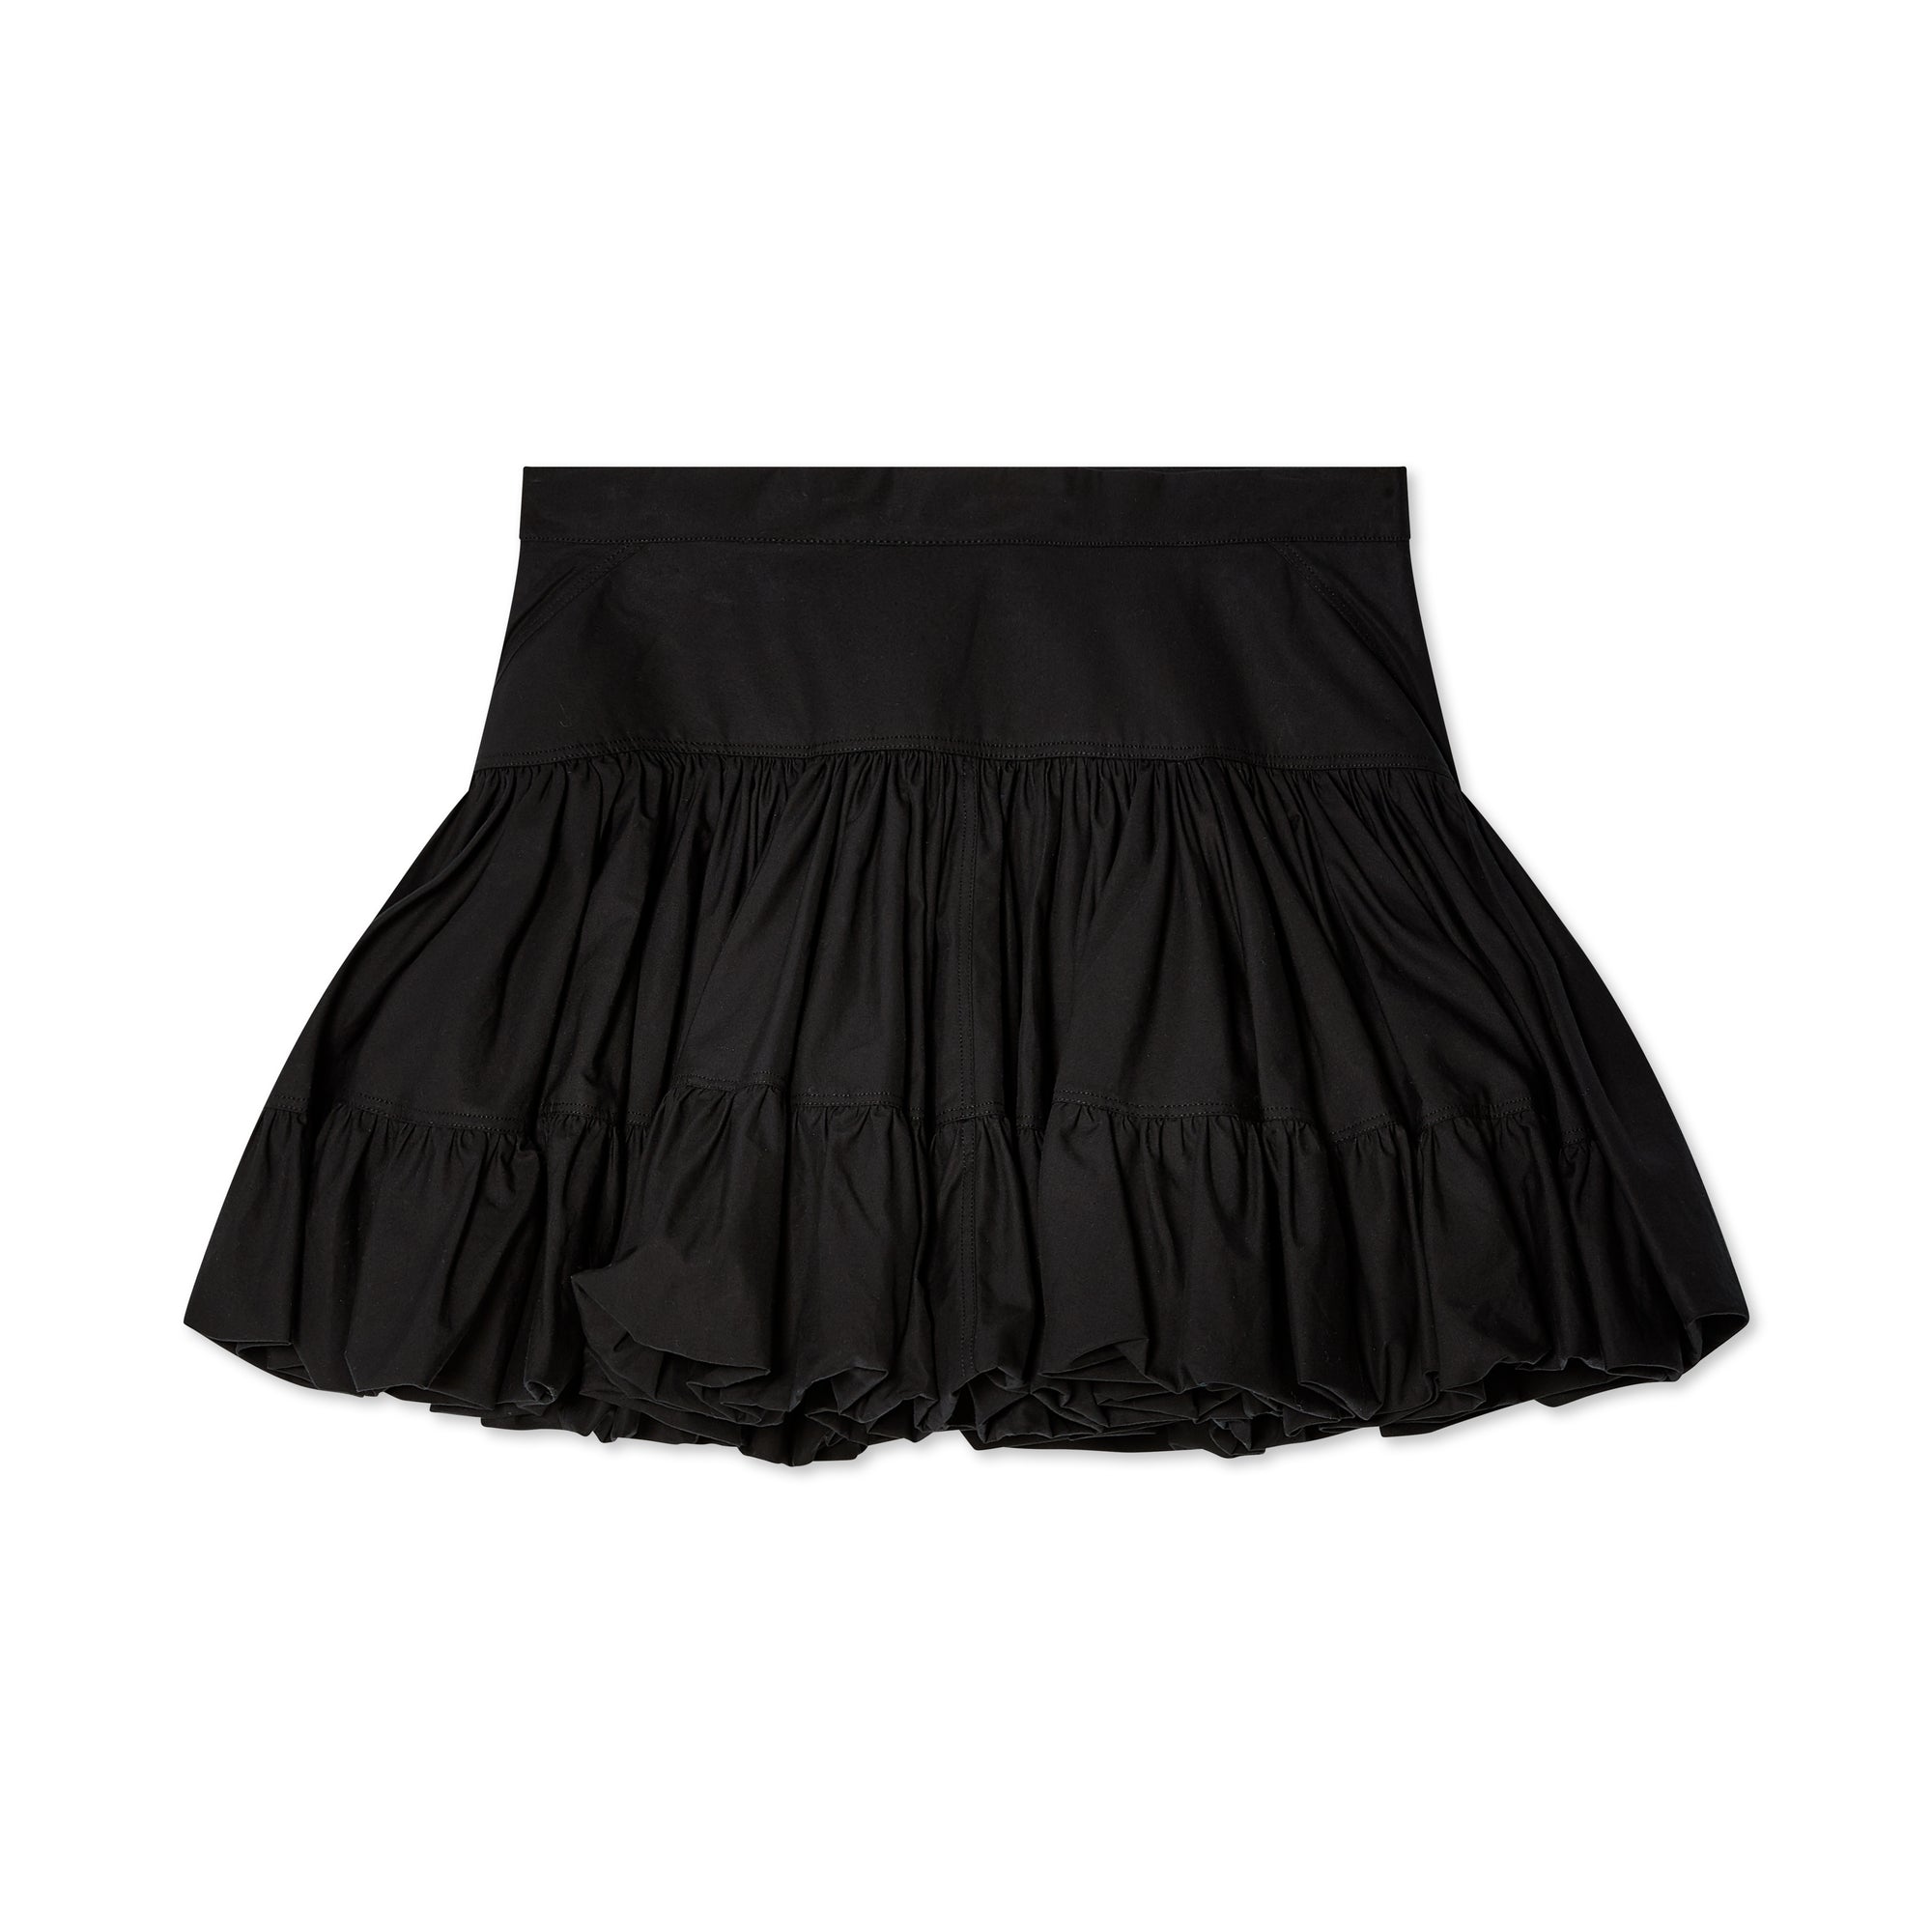 Transformable Skirt Bootleg Pants - Final Sale - Supplex Royal Accent on  Supplex Black - Small - 13 Skirt - 32 Inseam - Rogiani Inc